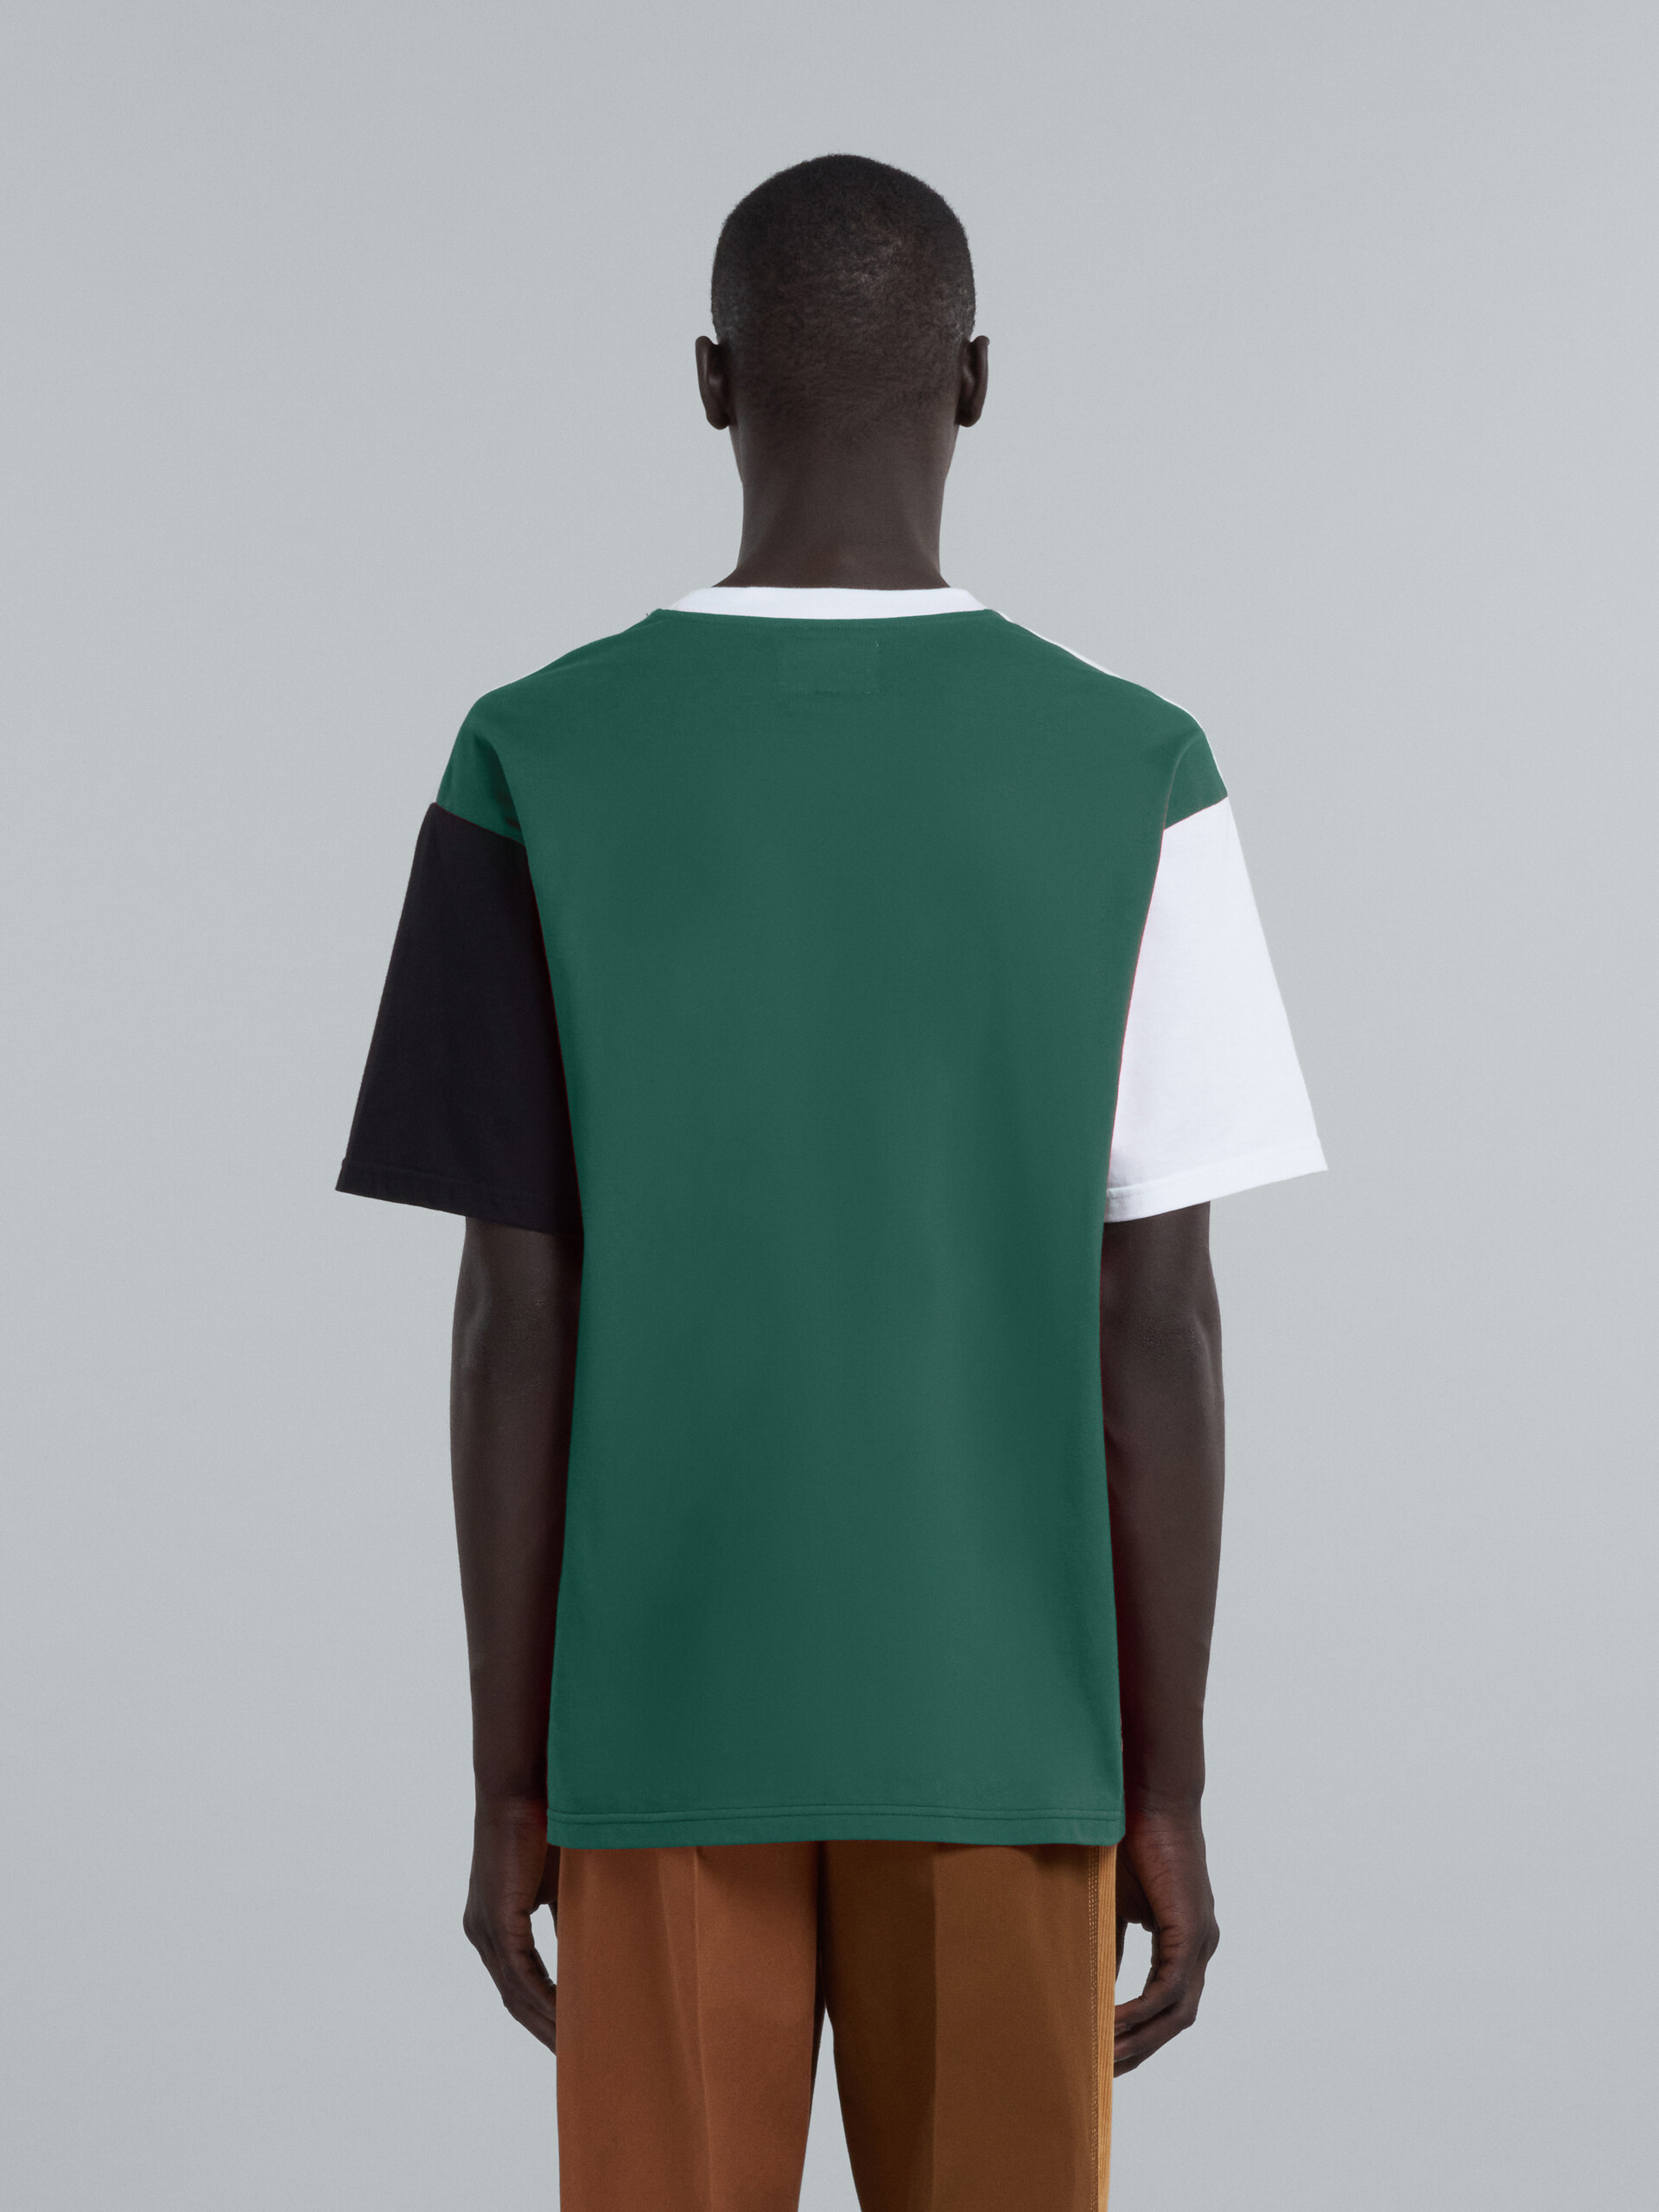 MARNI x CARHARTT WIP - green logo T-shirt - T-shirts - Image 3